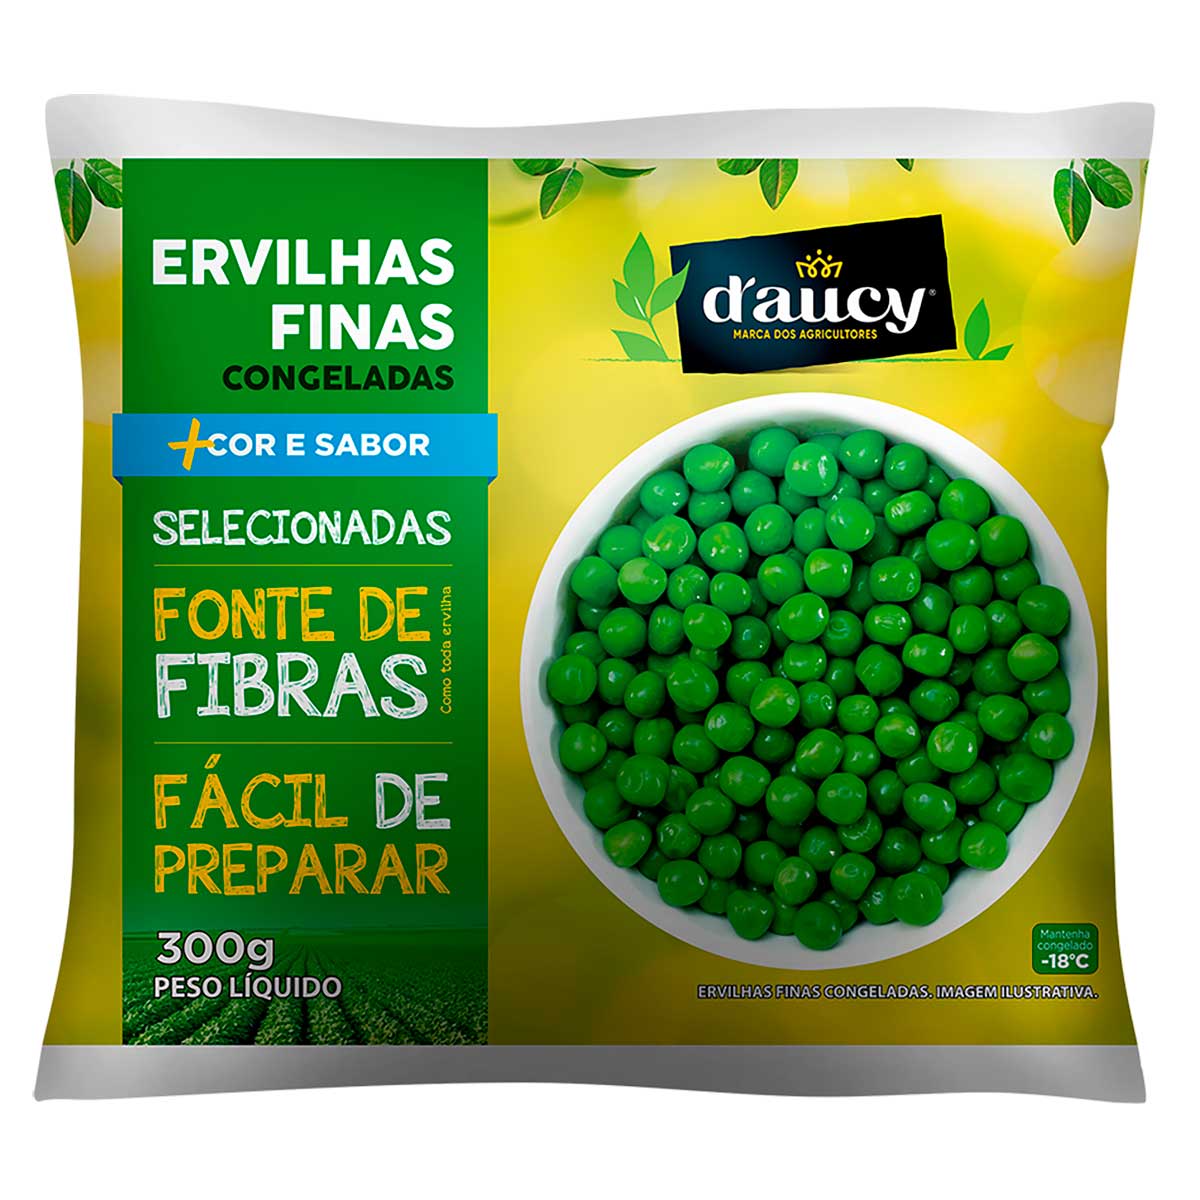 ervilha-congelada-inteira-daucy-legumes-300g-1.jpg